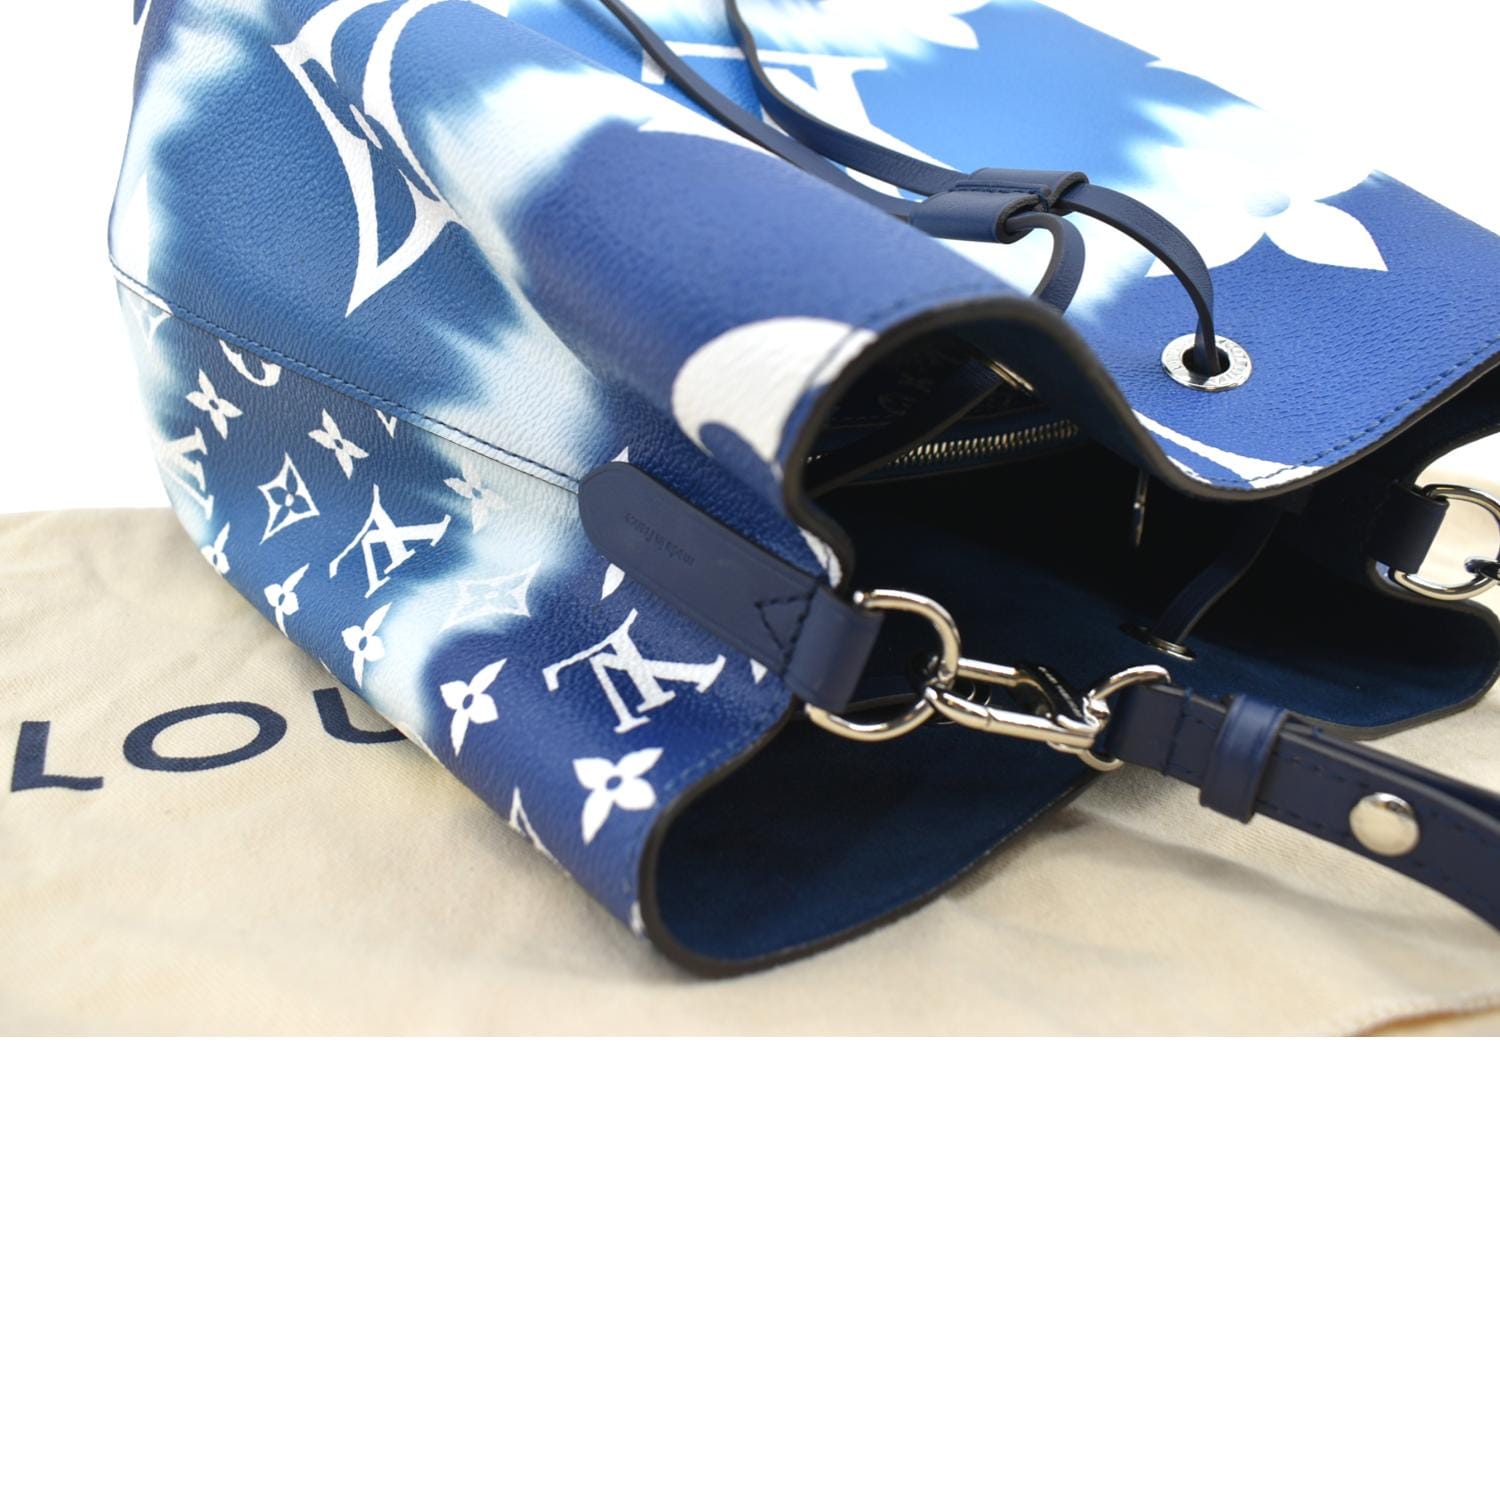 LOUIS VUITTON ESCALE BLUE NEO NOE BAG TIE DYE Color LIMITED EDITION (Brand  New)